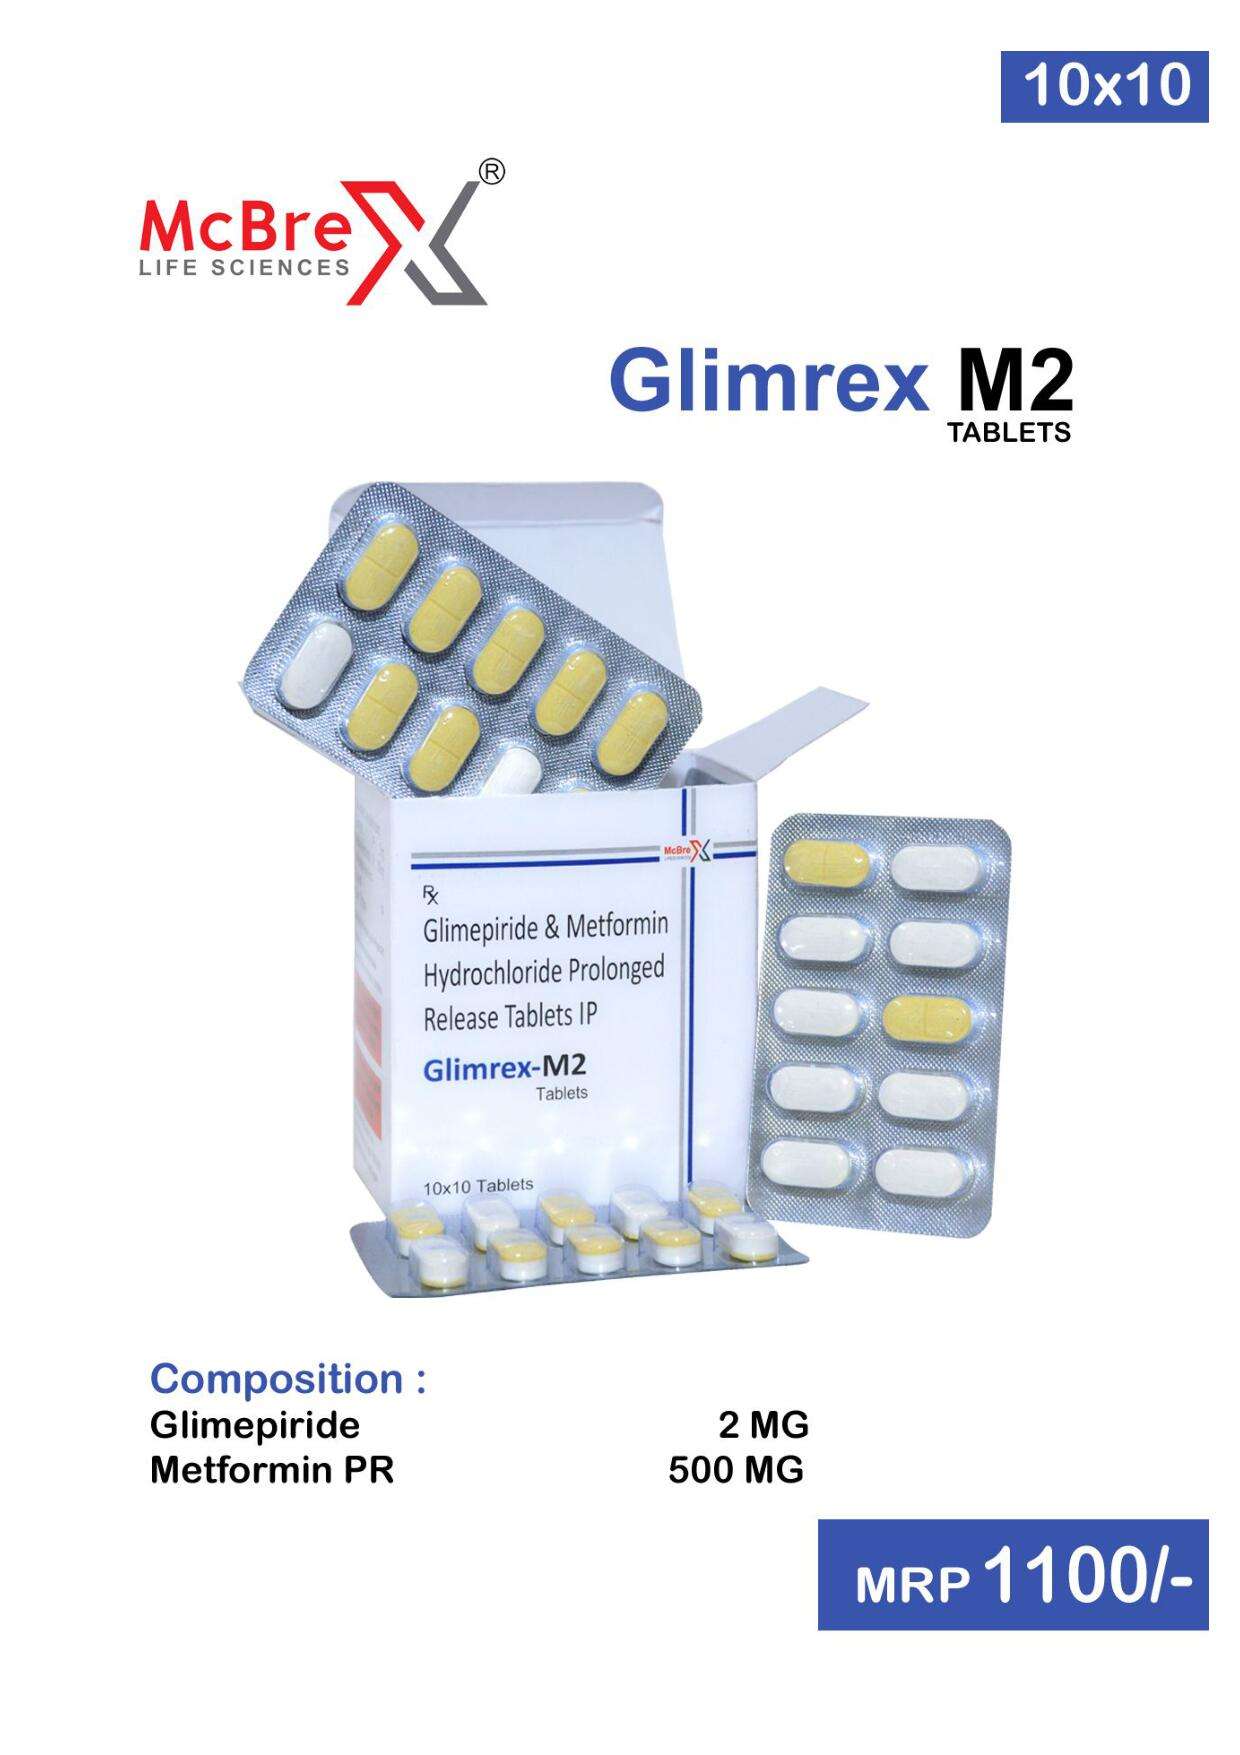 glimepiride 2mg + metformin pr 500mg